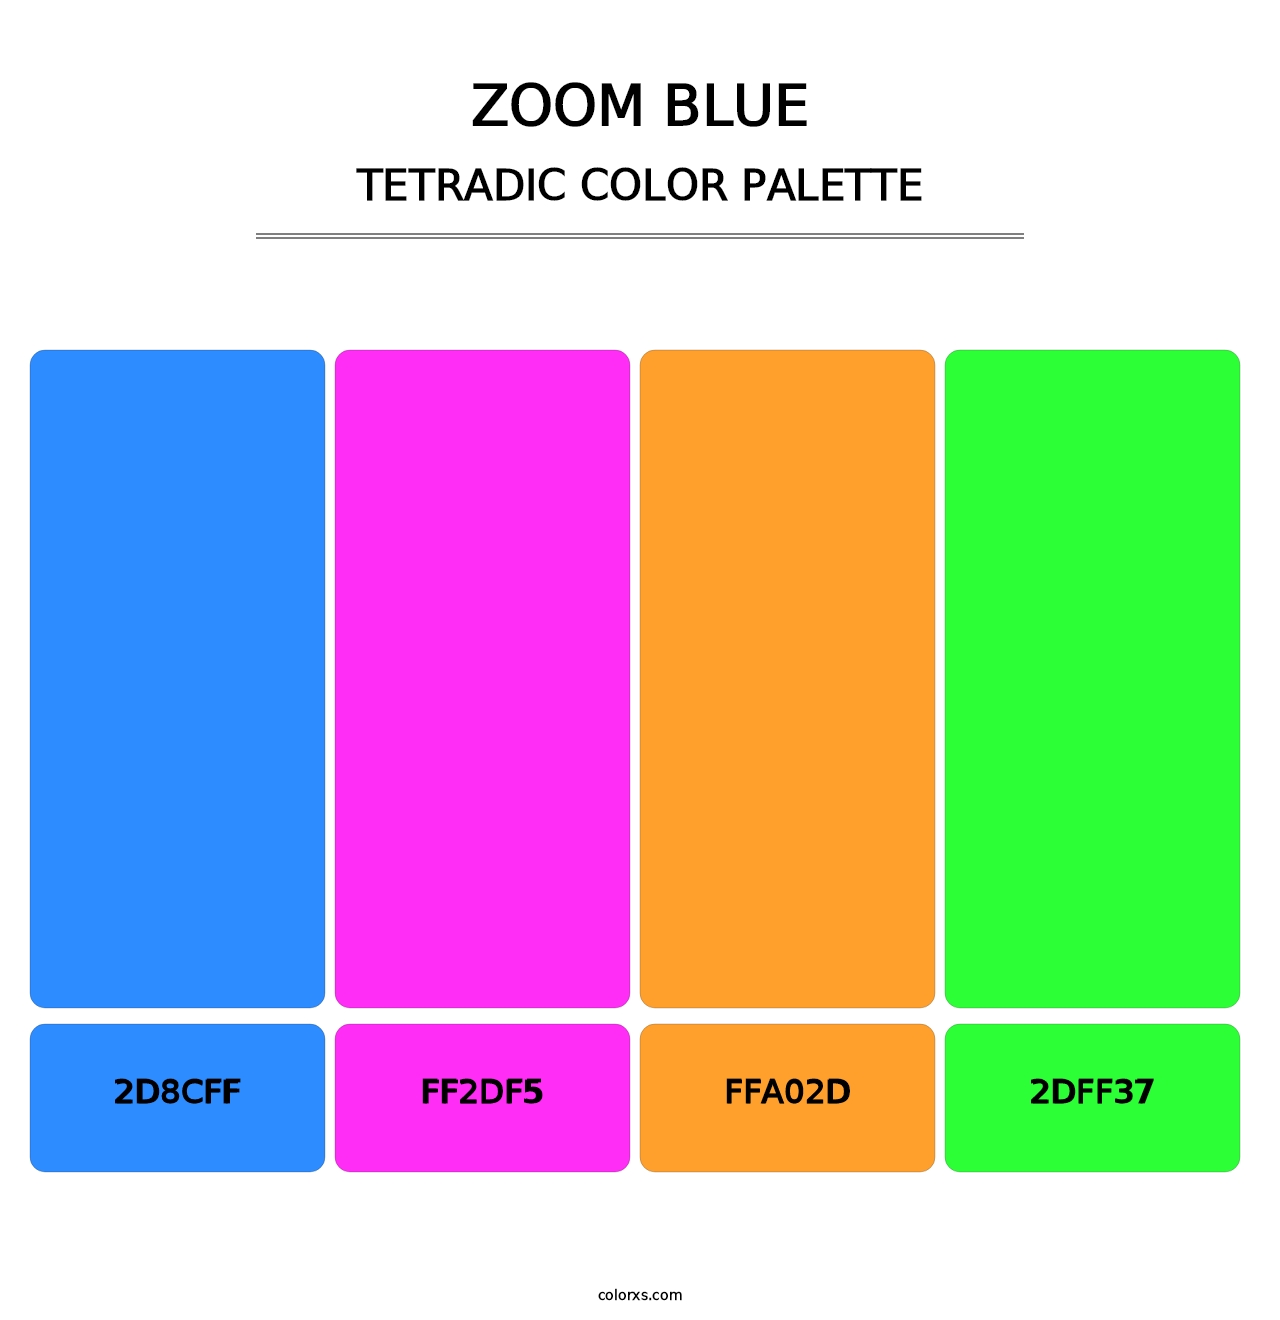 Zoom Blue - Tetradic Color Palette